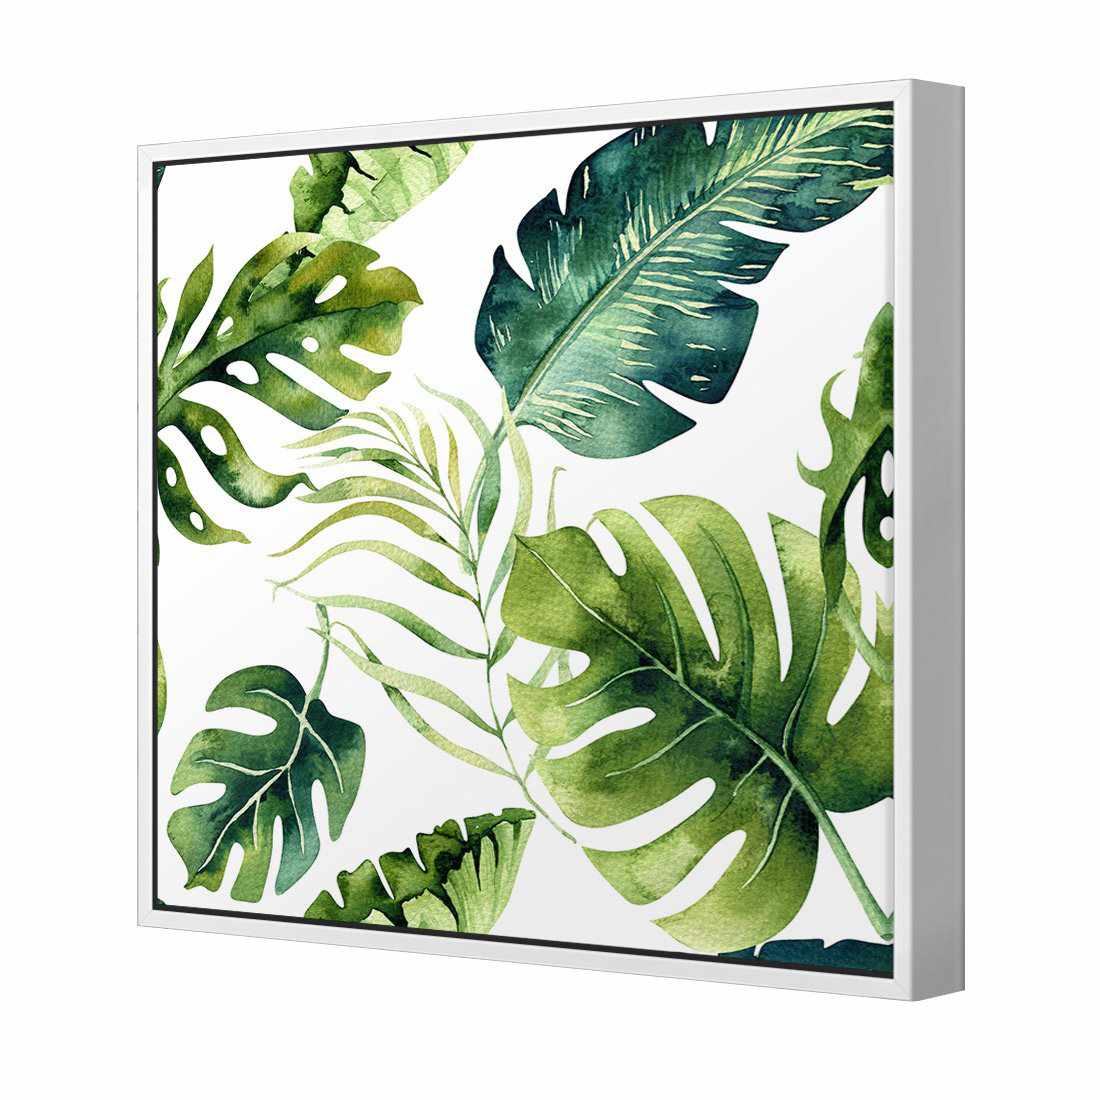 Fascinating Foliage Canvas Art-Canvas-Wall Art Designs-30x30cm-Canvas - White Frame-Wall Art Designs